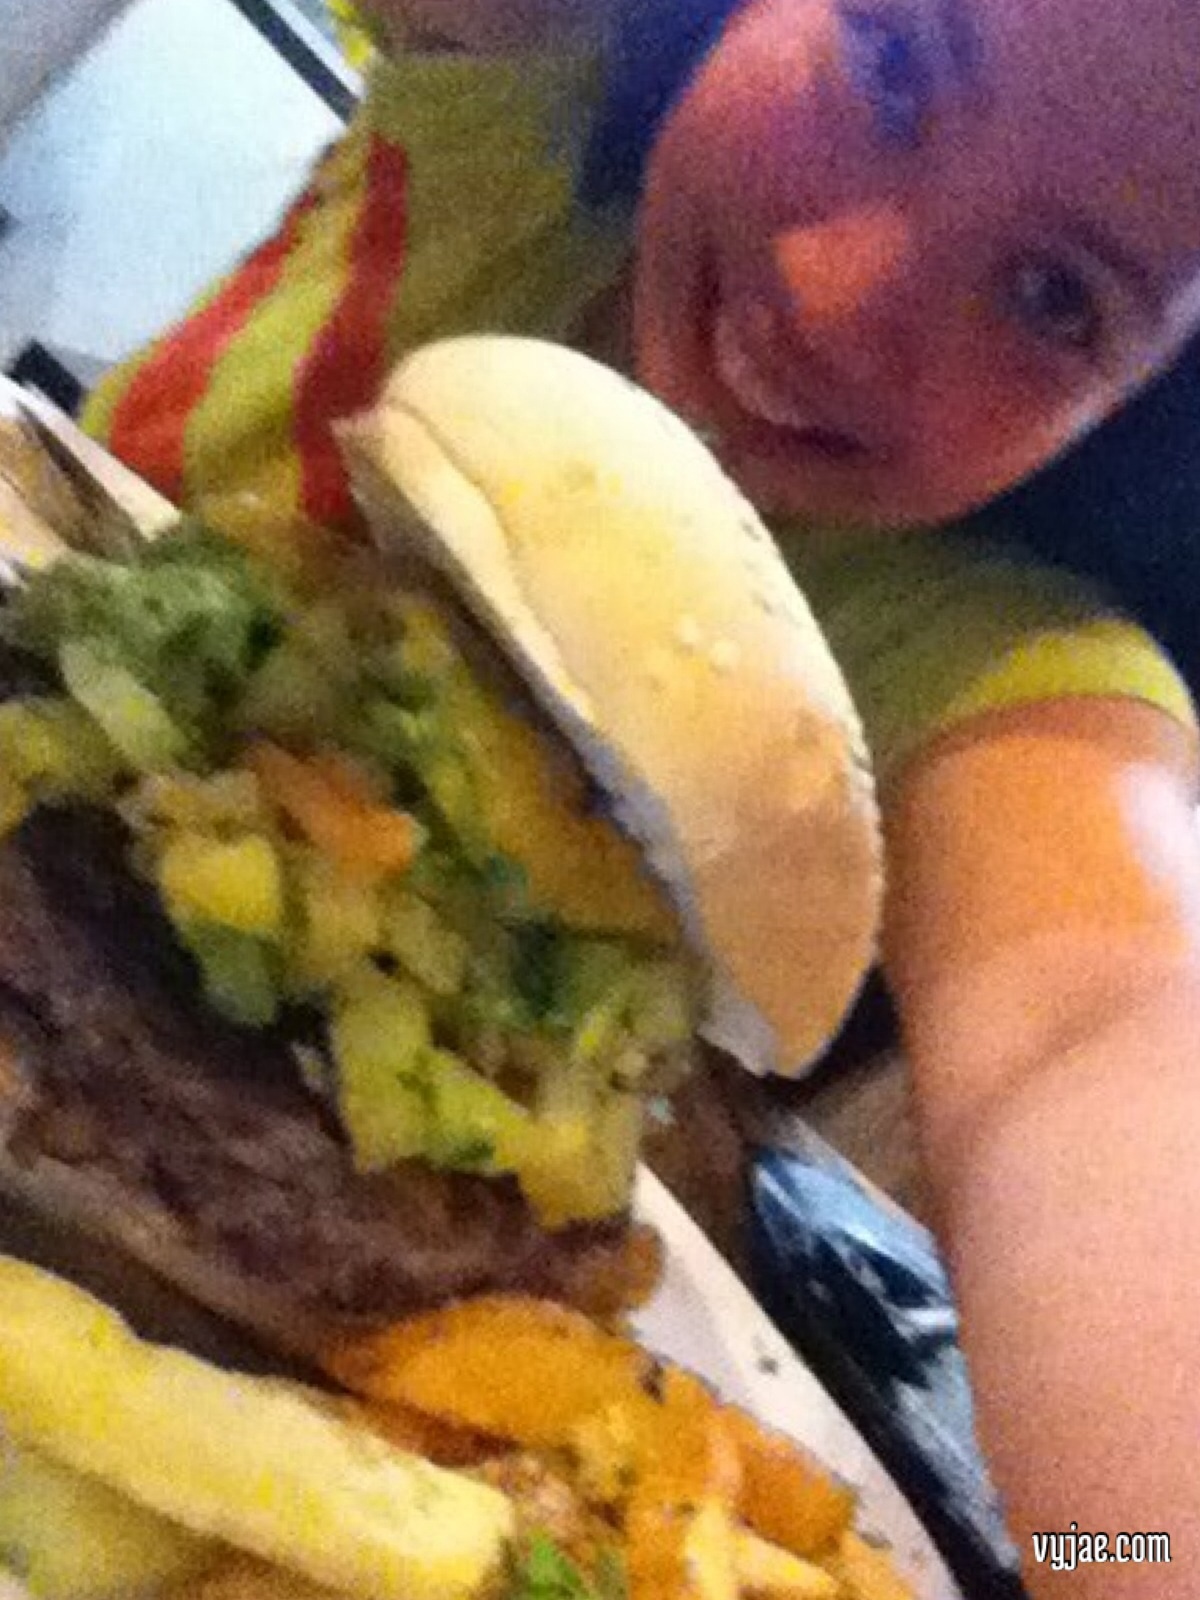 I just got to take a Burger Selfie! LOL